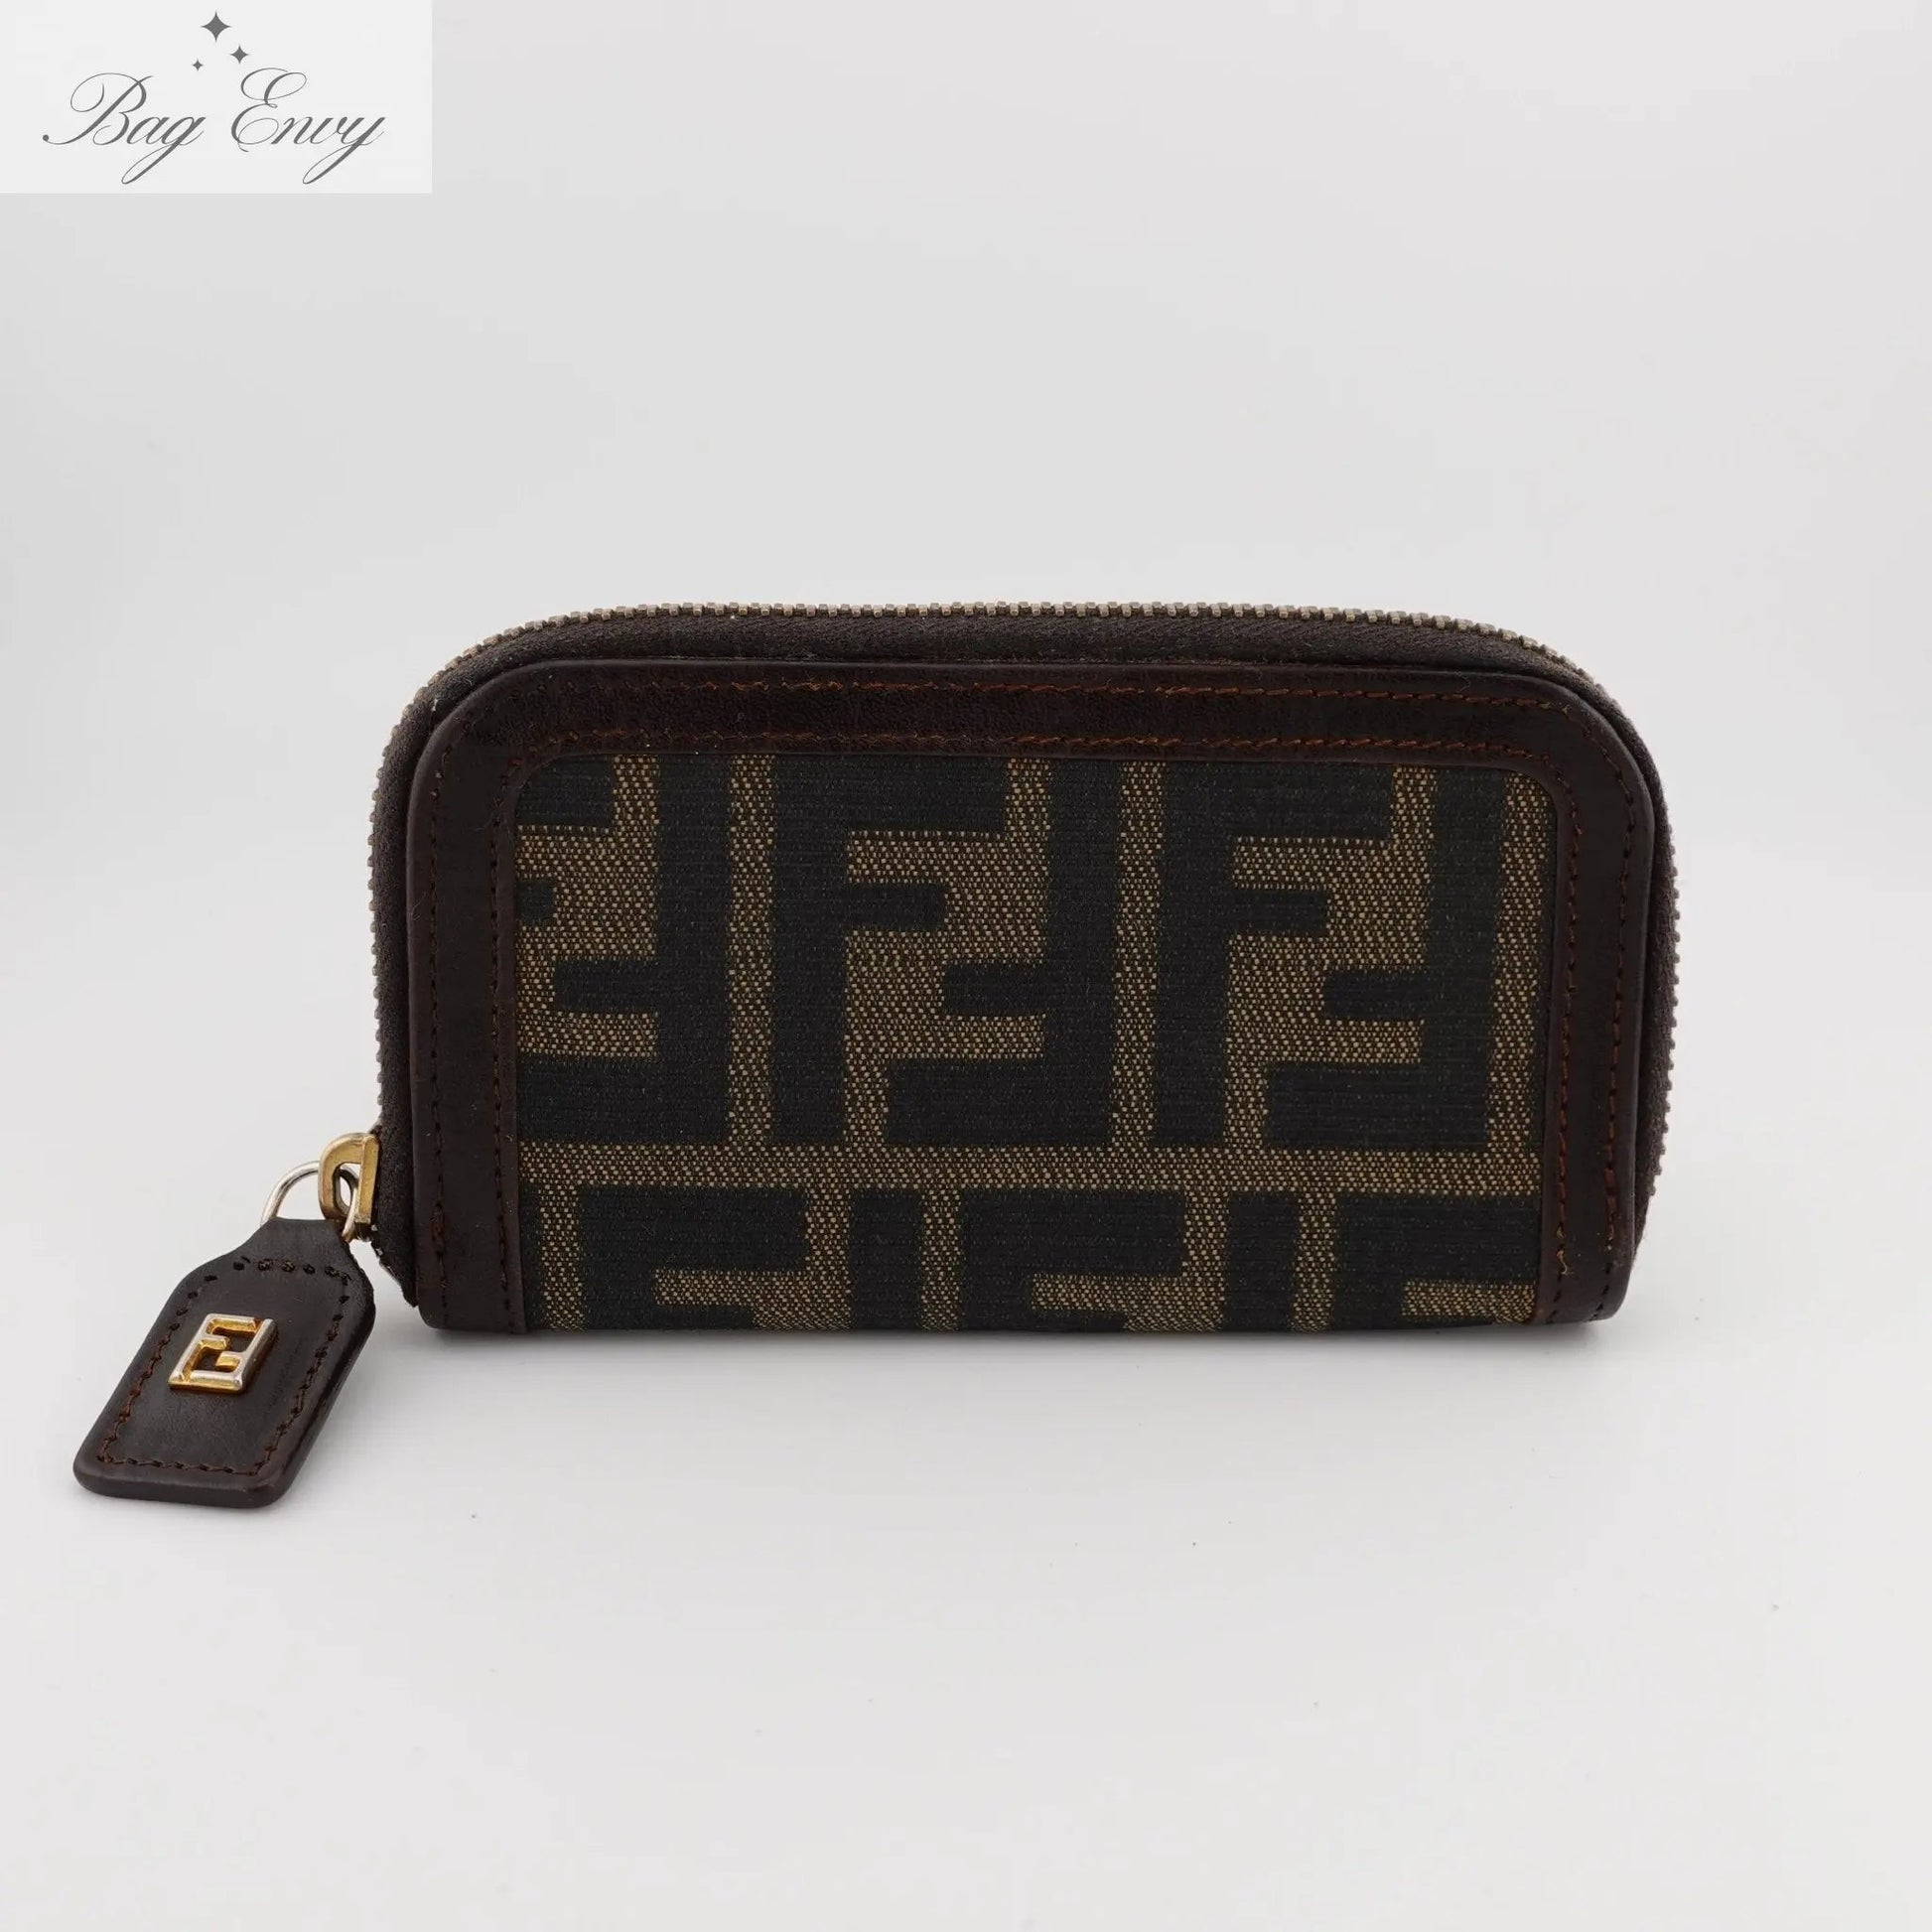 FENDI Zucca Zip Key/Card Holder - Bag Envy